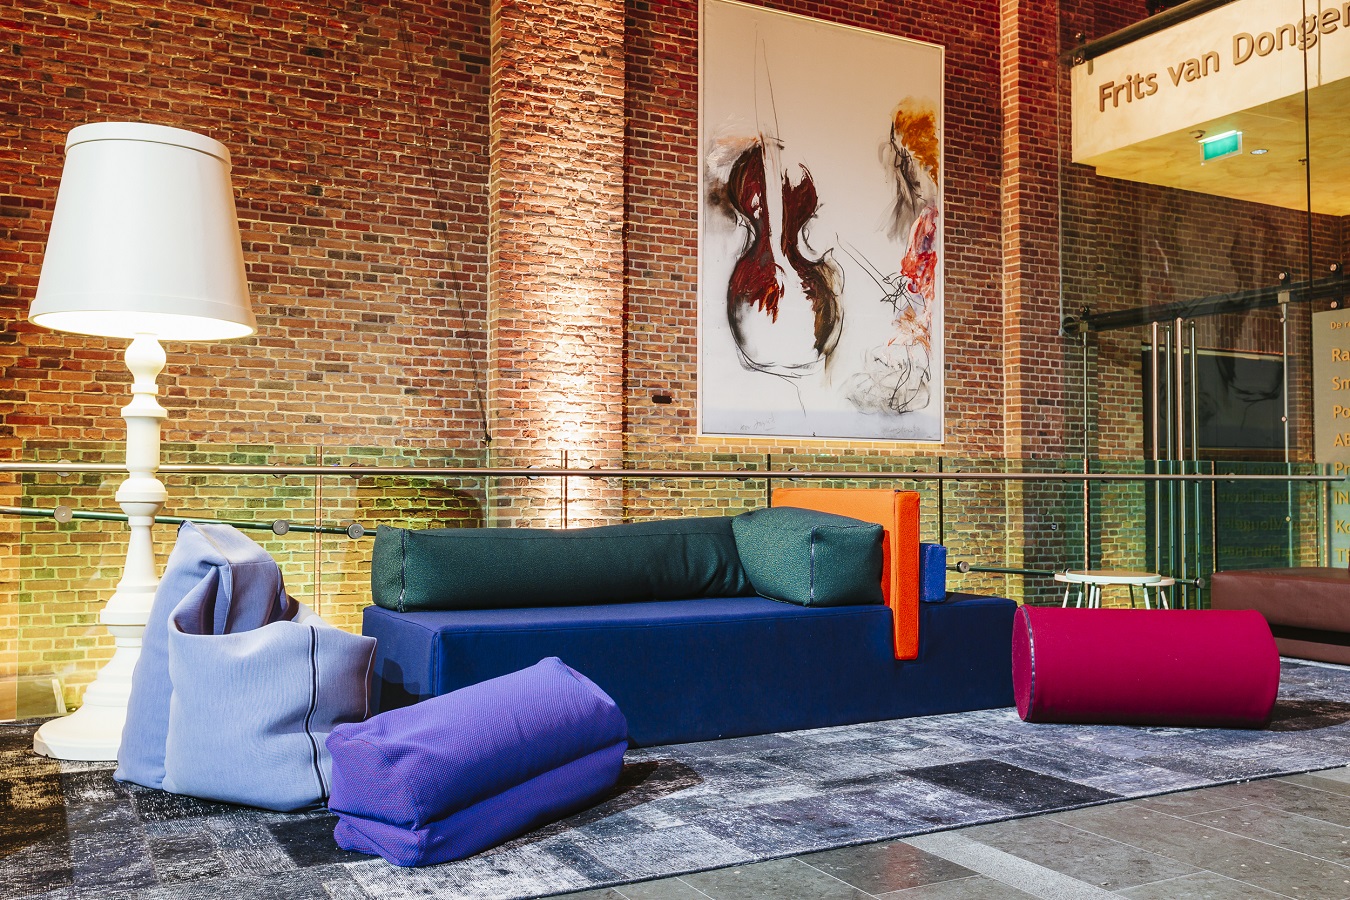 verlichten Gangster Ringlet Dutch Design meubilair zorgt voor interactie in Philharmonie | Events.nl